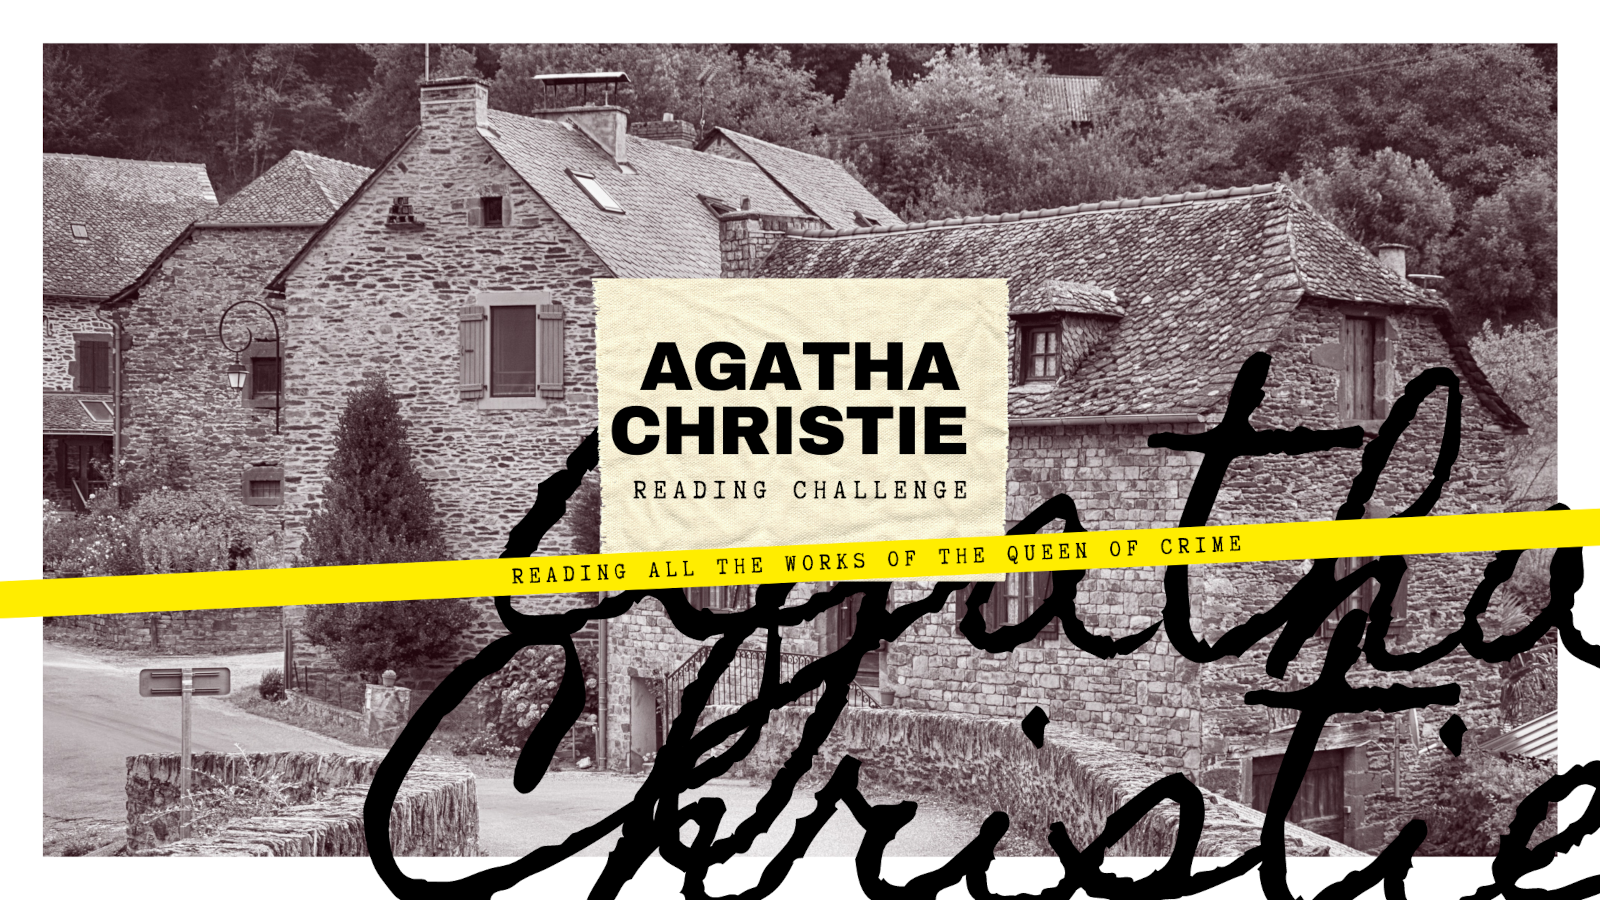 Agatha Christie Lese-Challenge